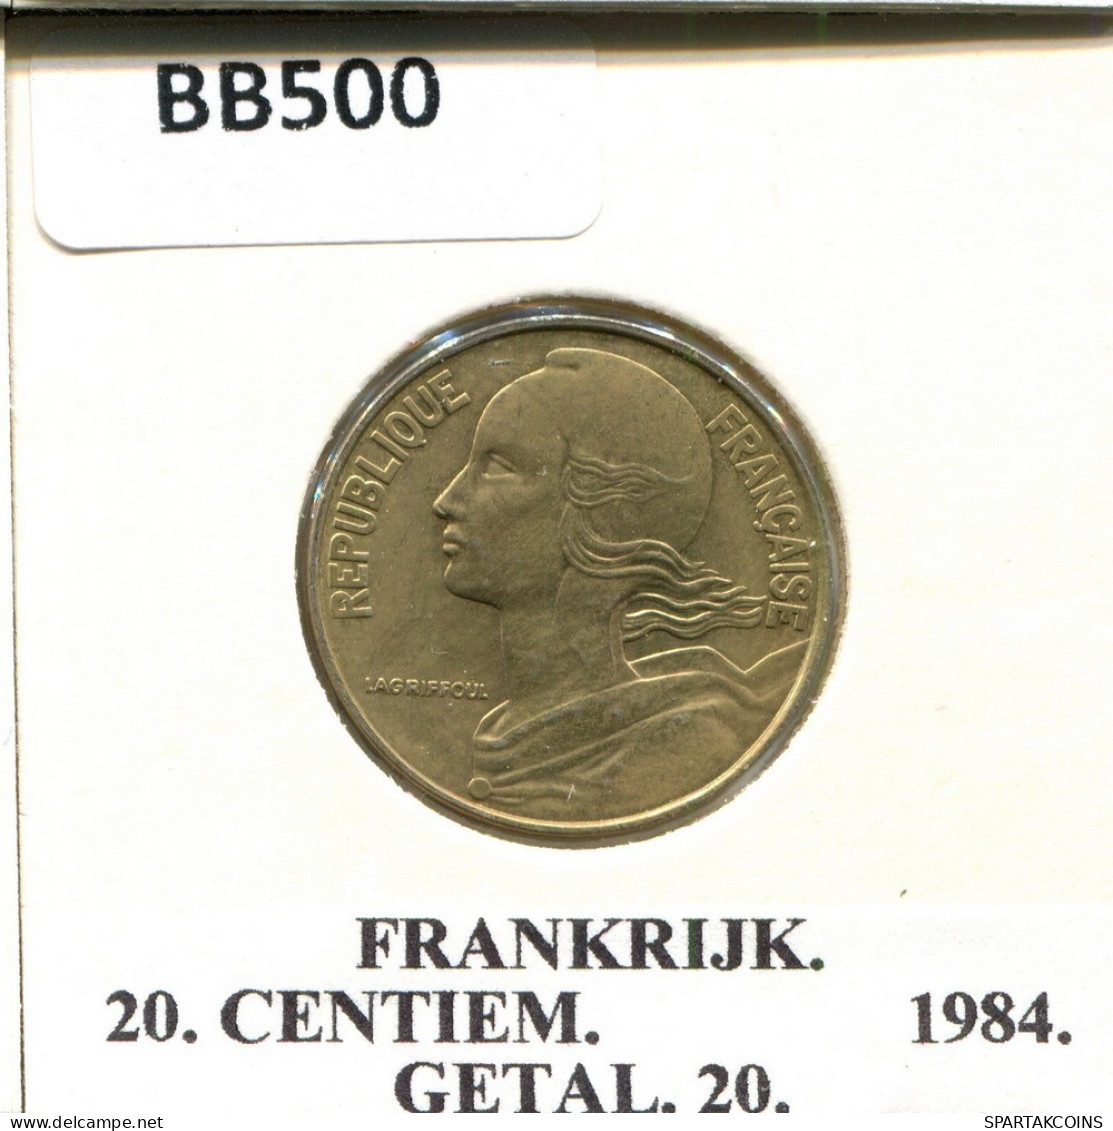 20 CENTIMES 1984 FRANKREICH FRANCE Französisch Münze #BB500.D.A - 20 Centimes